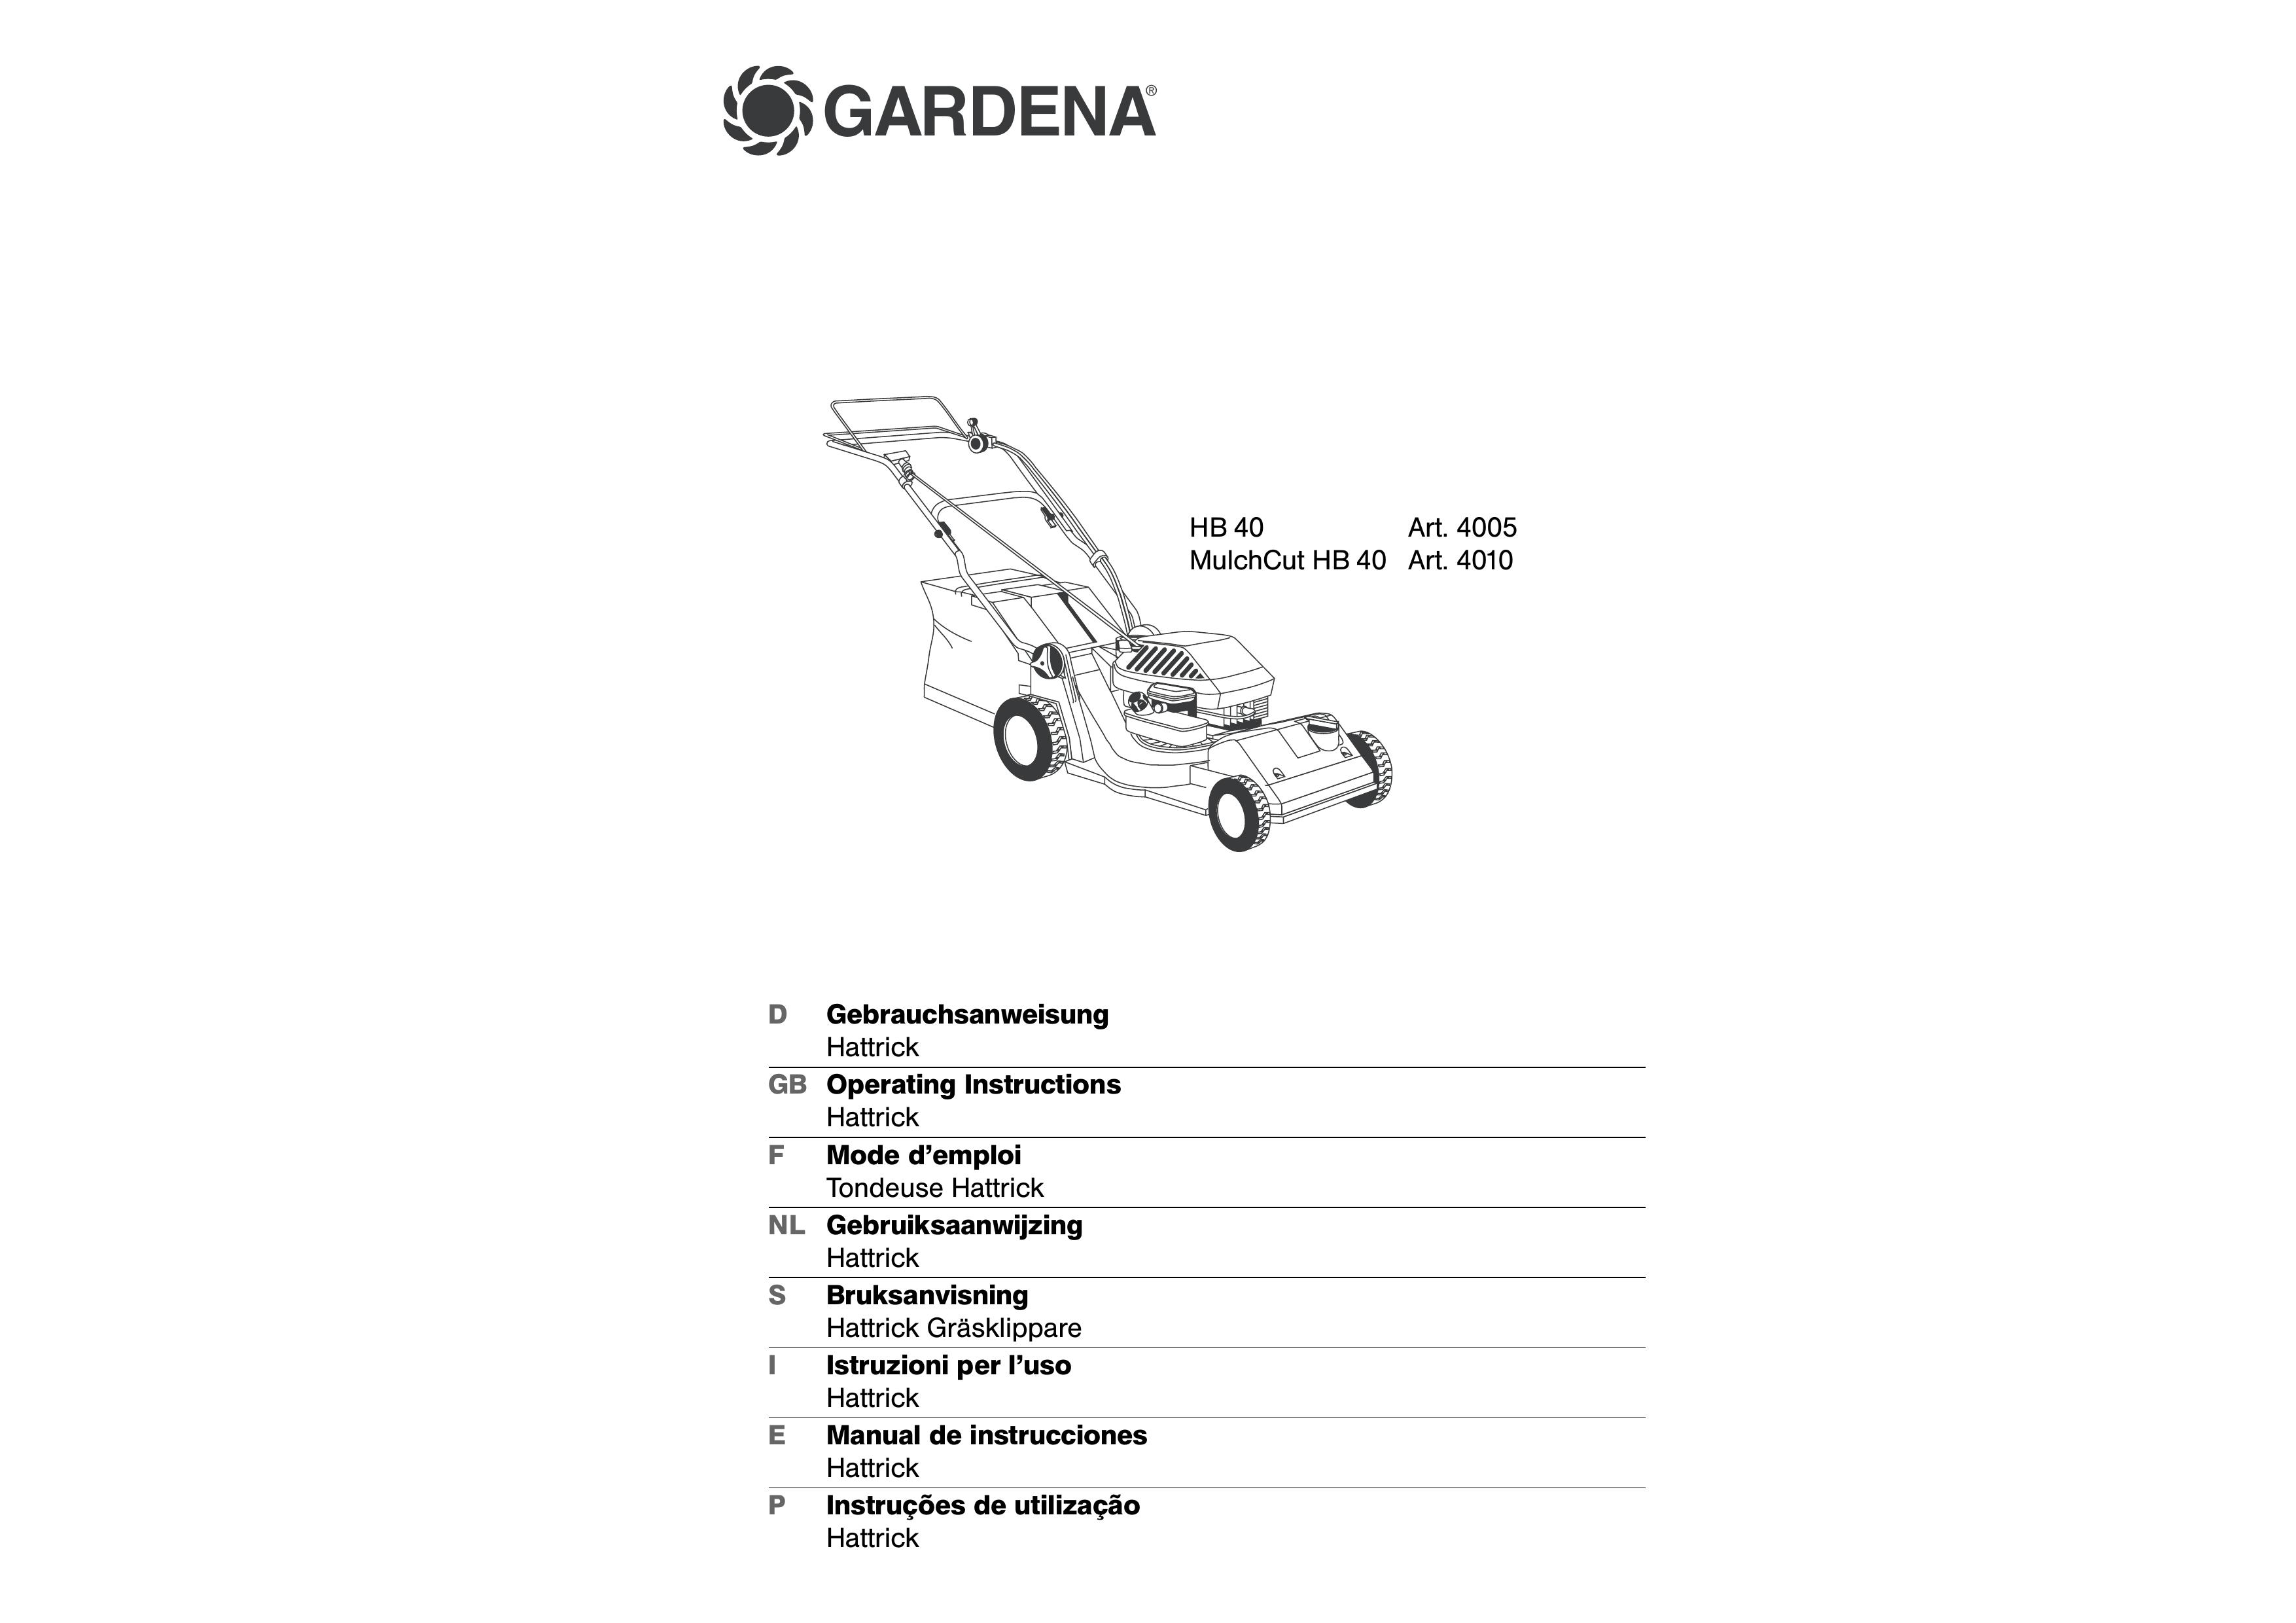 Gardena Art. 4010 Lawn Mower User Manual